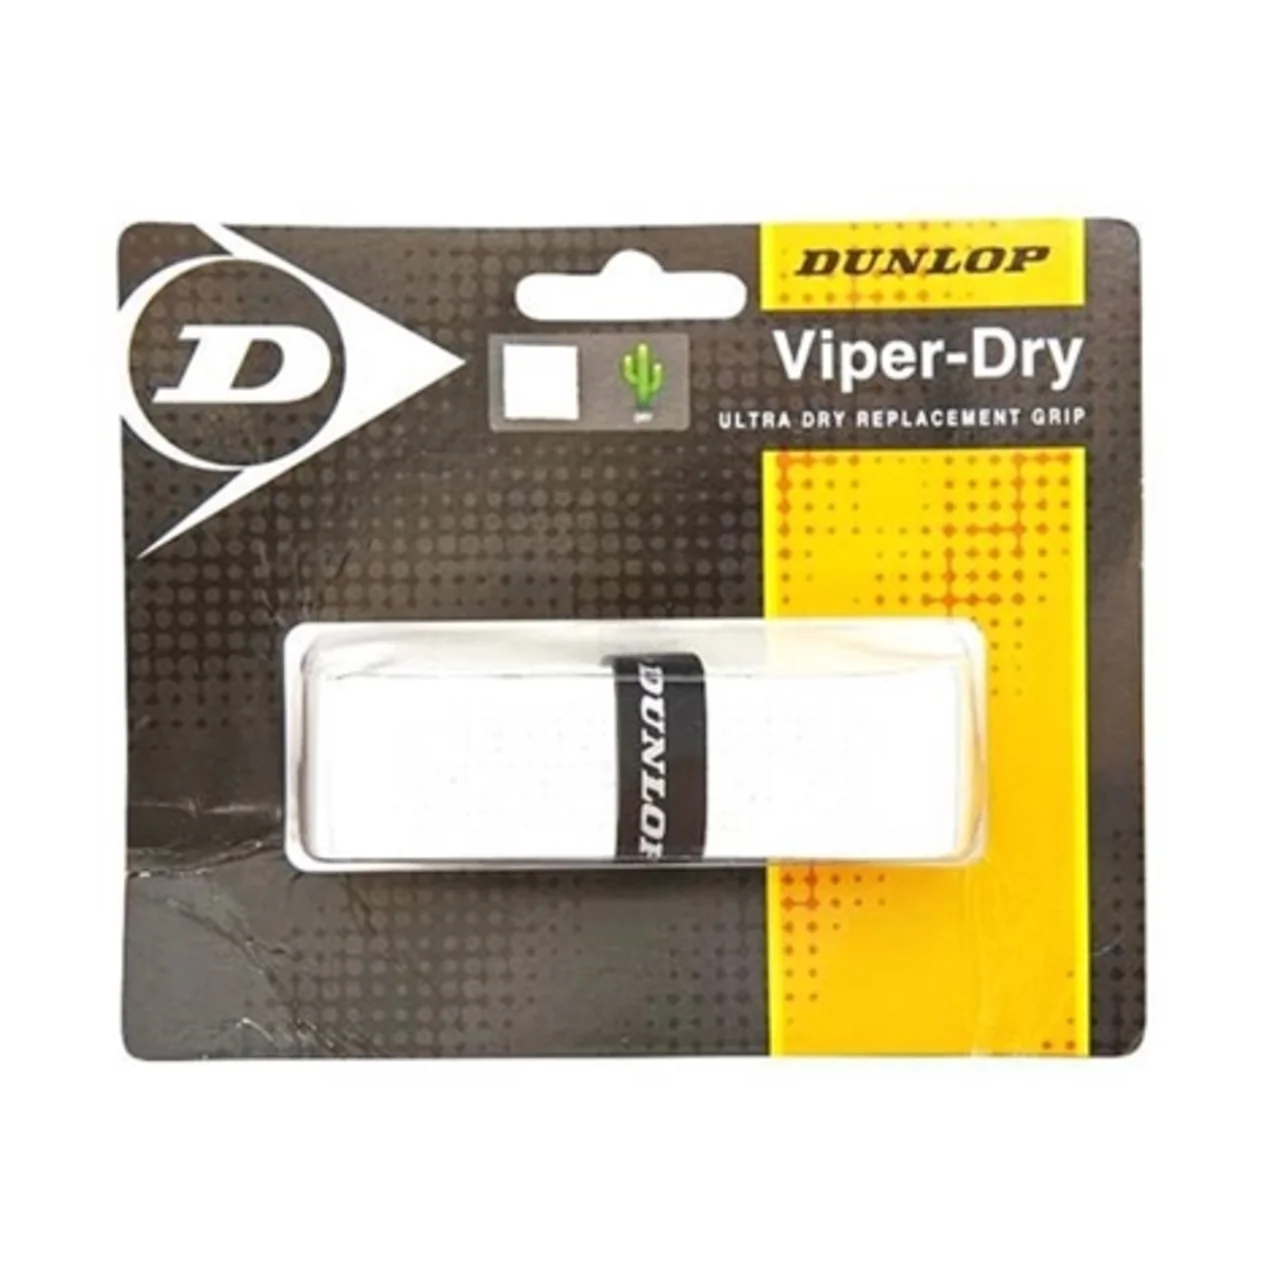 Dunlop Viperdry